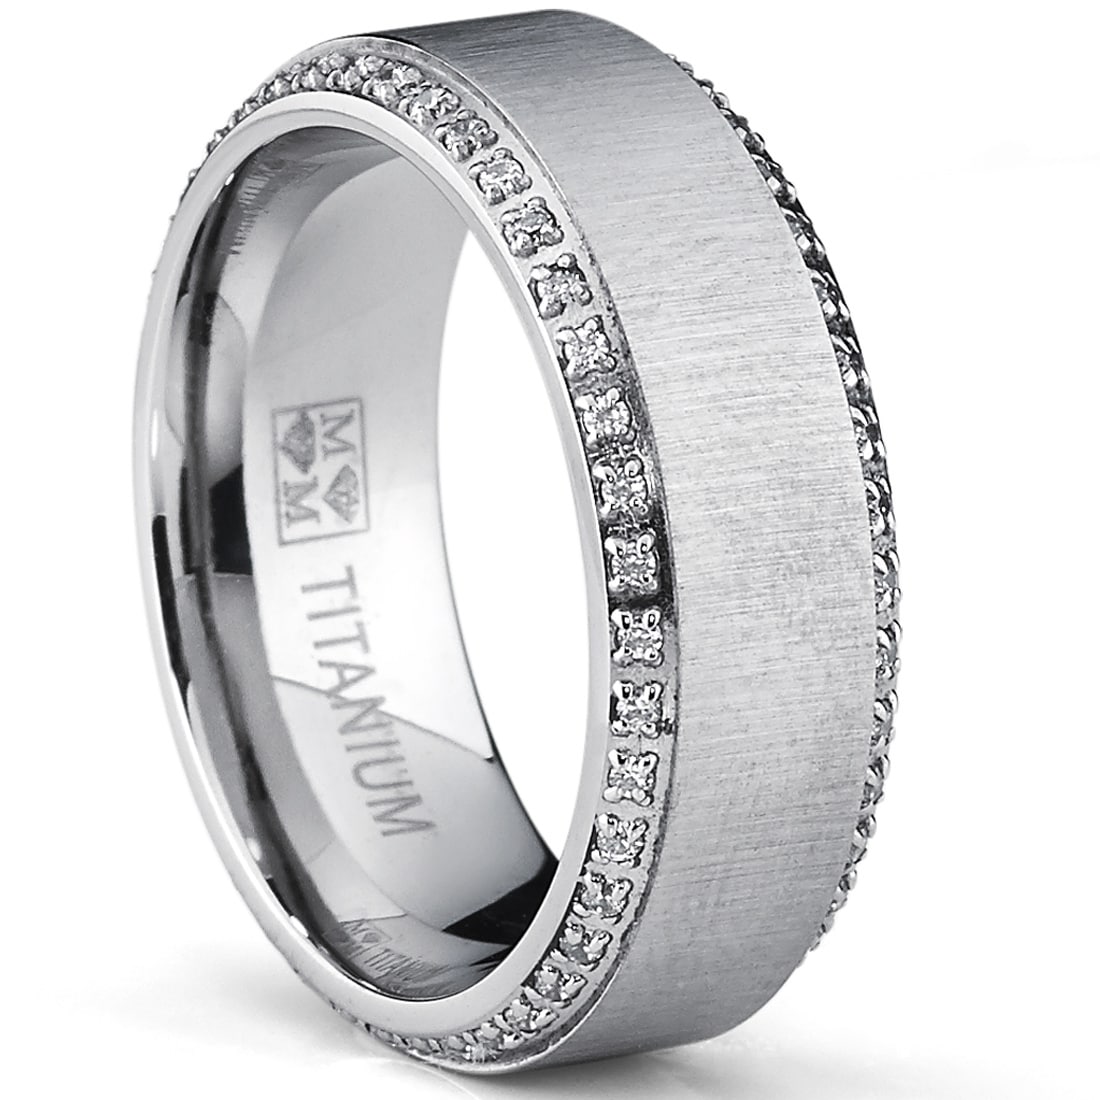 Buy Titanium Men S Wedding Bands Groom Wedding Rings Online At